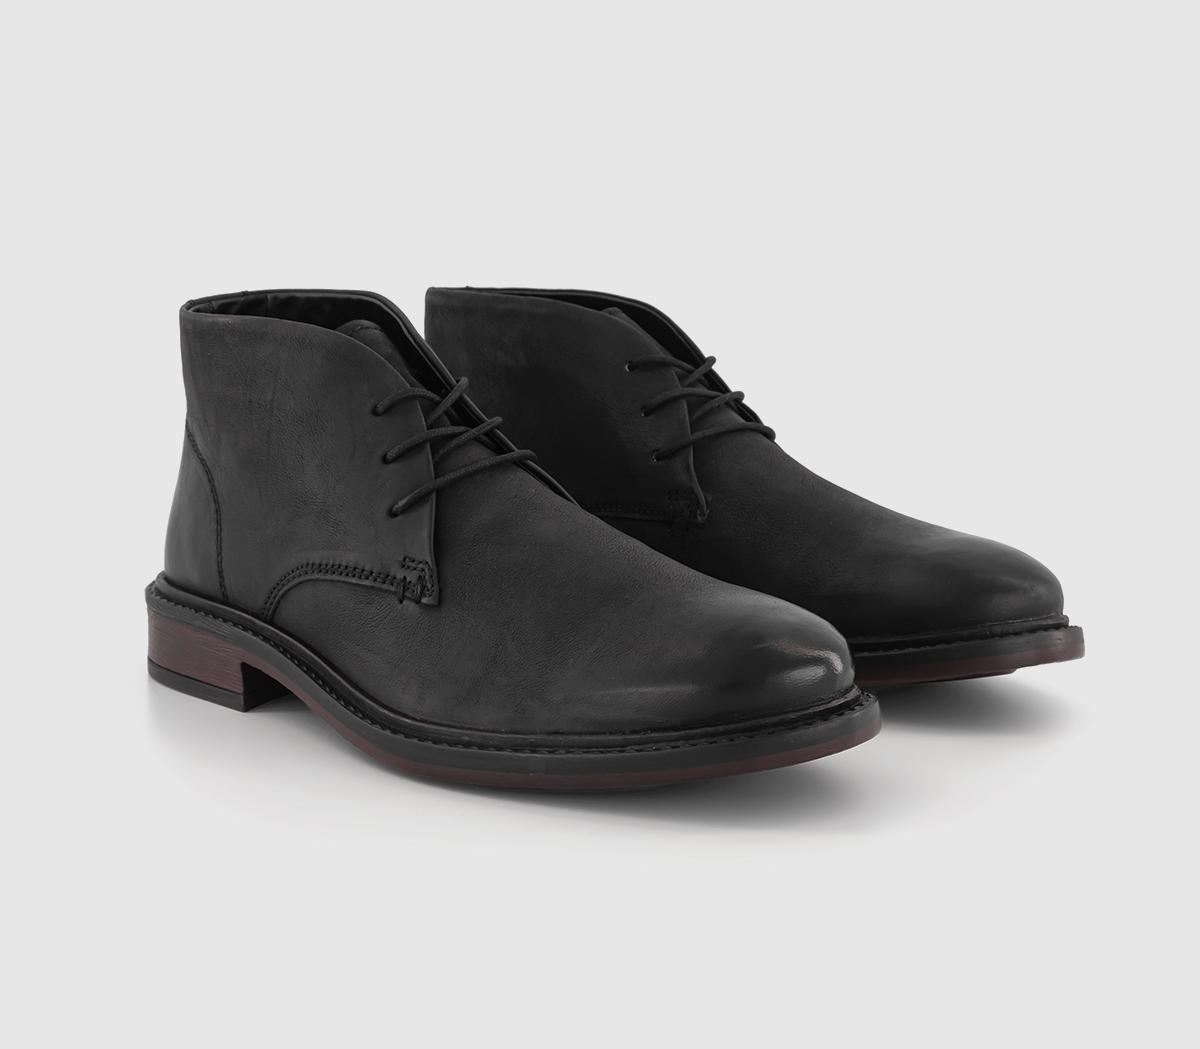 OFFICE Mens Burlington Chukka Boots Black Leather, 11